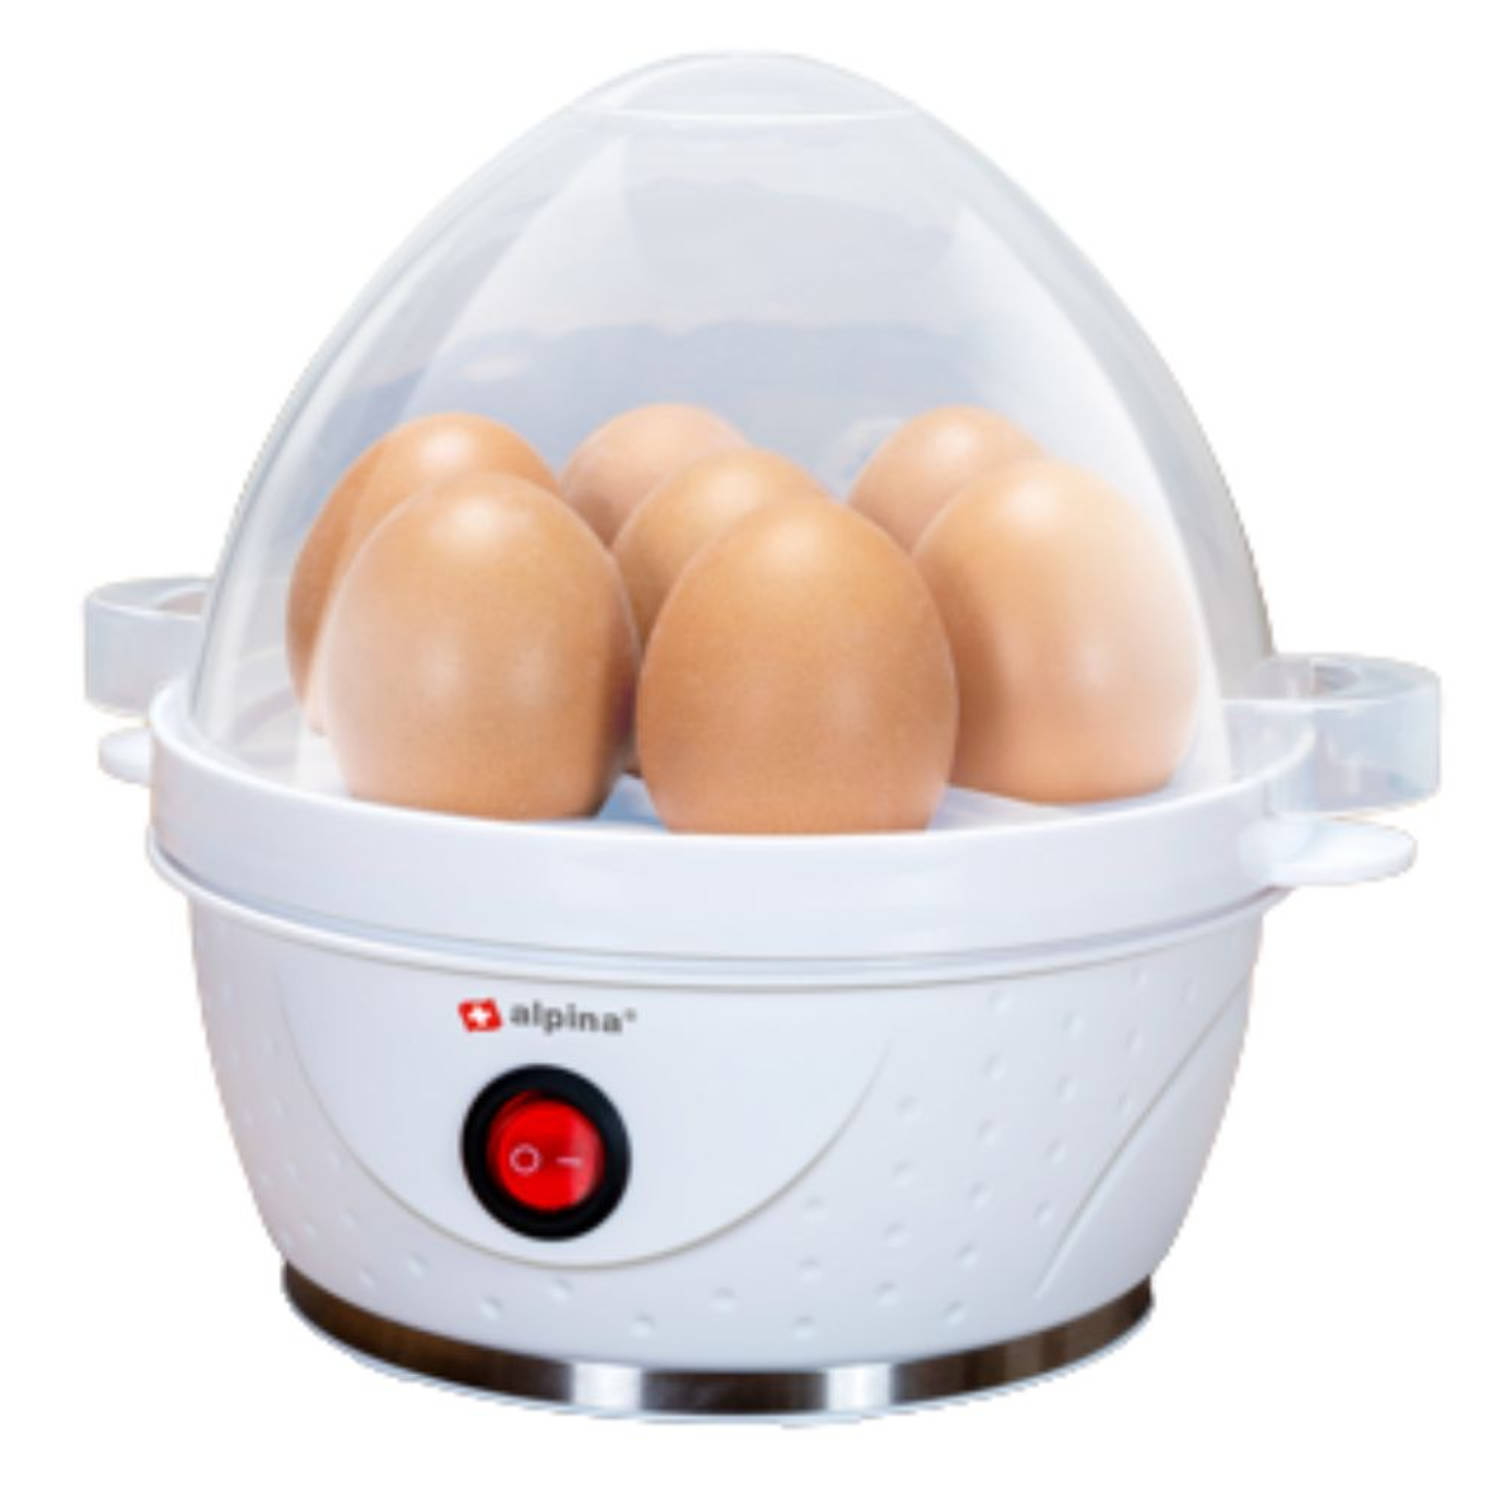 alpina Elektrische Eierkoker - Eierkoker Voor 7 Eieren - Incl. Maatbeker, Eierrek en Eierprikker - 230V - 320-380W - Waarschuwingssignaal - Antislip - Zacht/ Medium of Hardgekookte